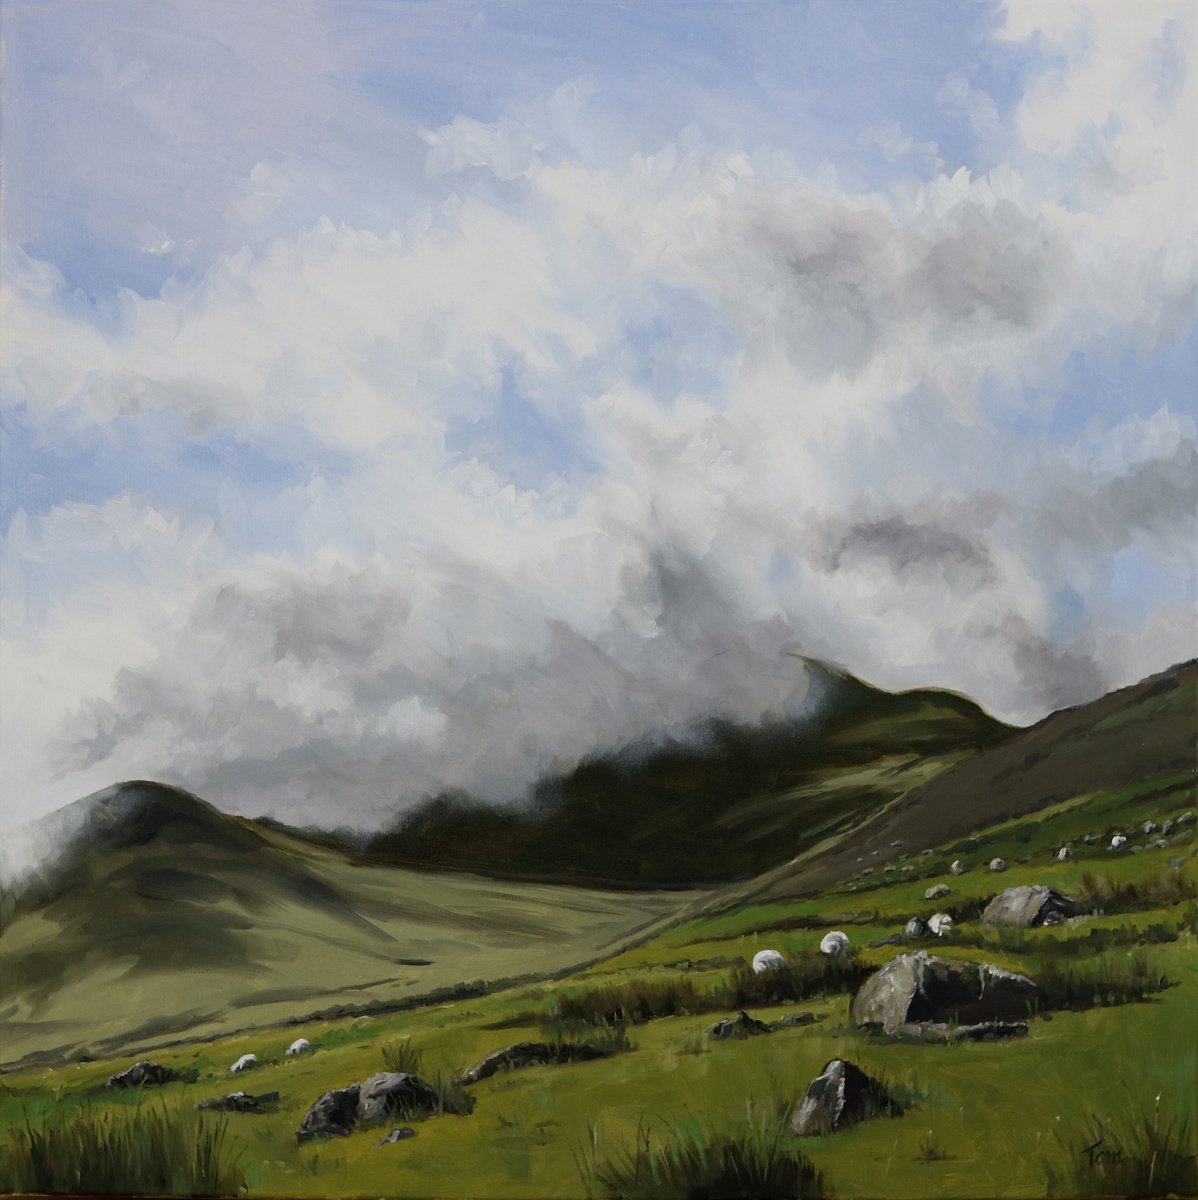 Sheep on a Snowdonia hillside by Tom Clay